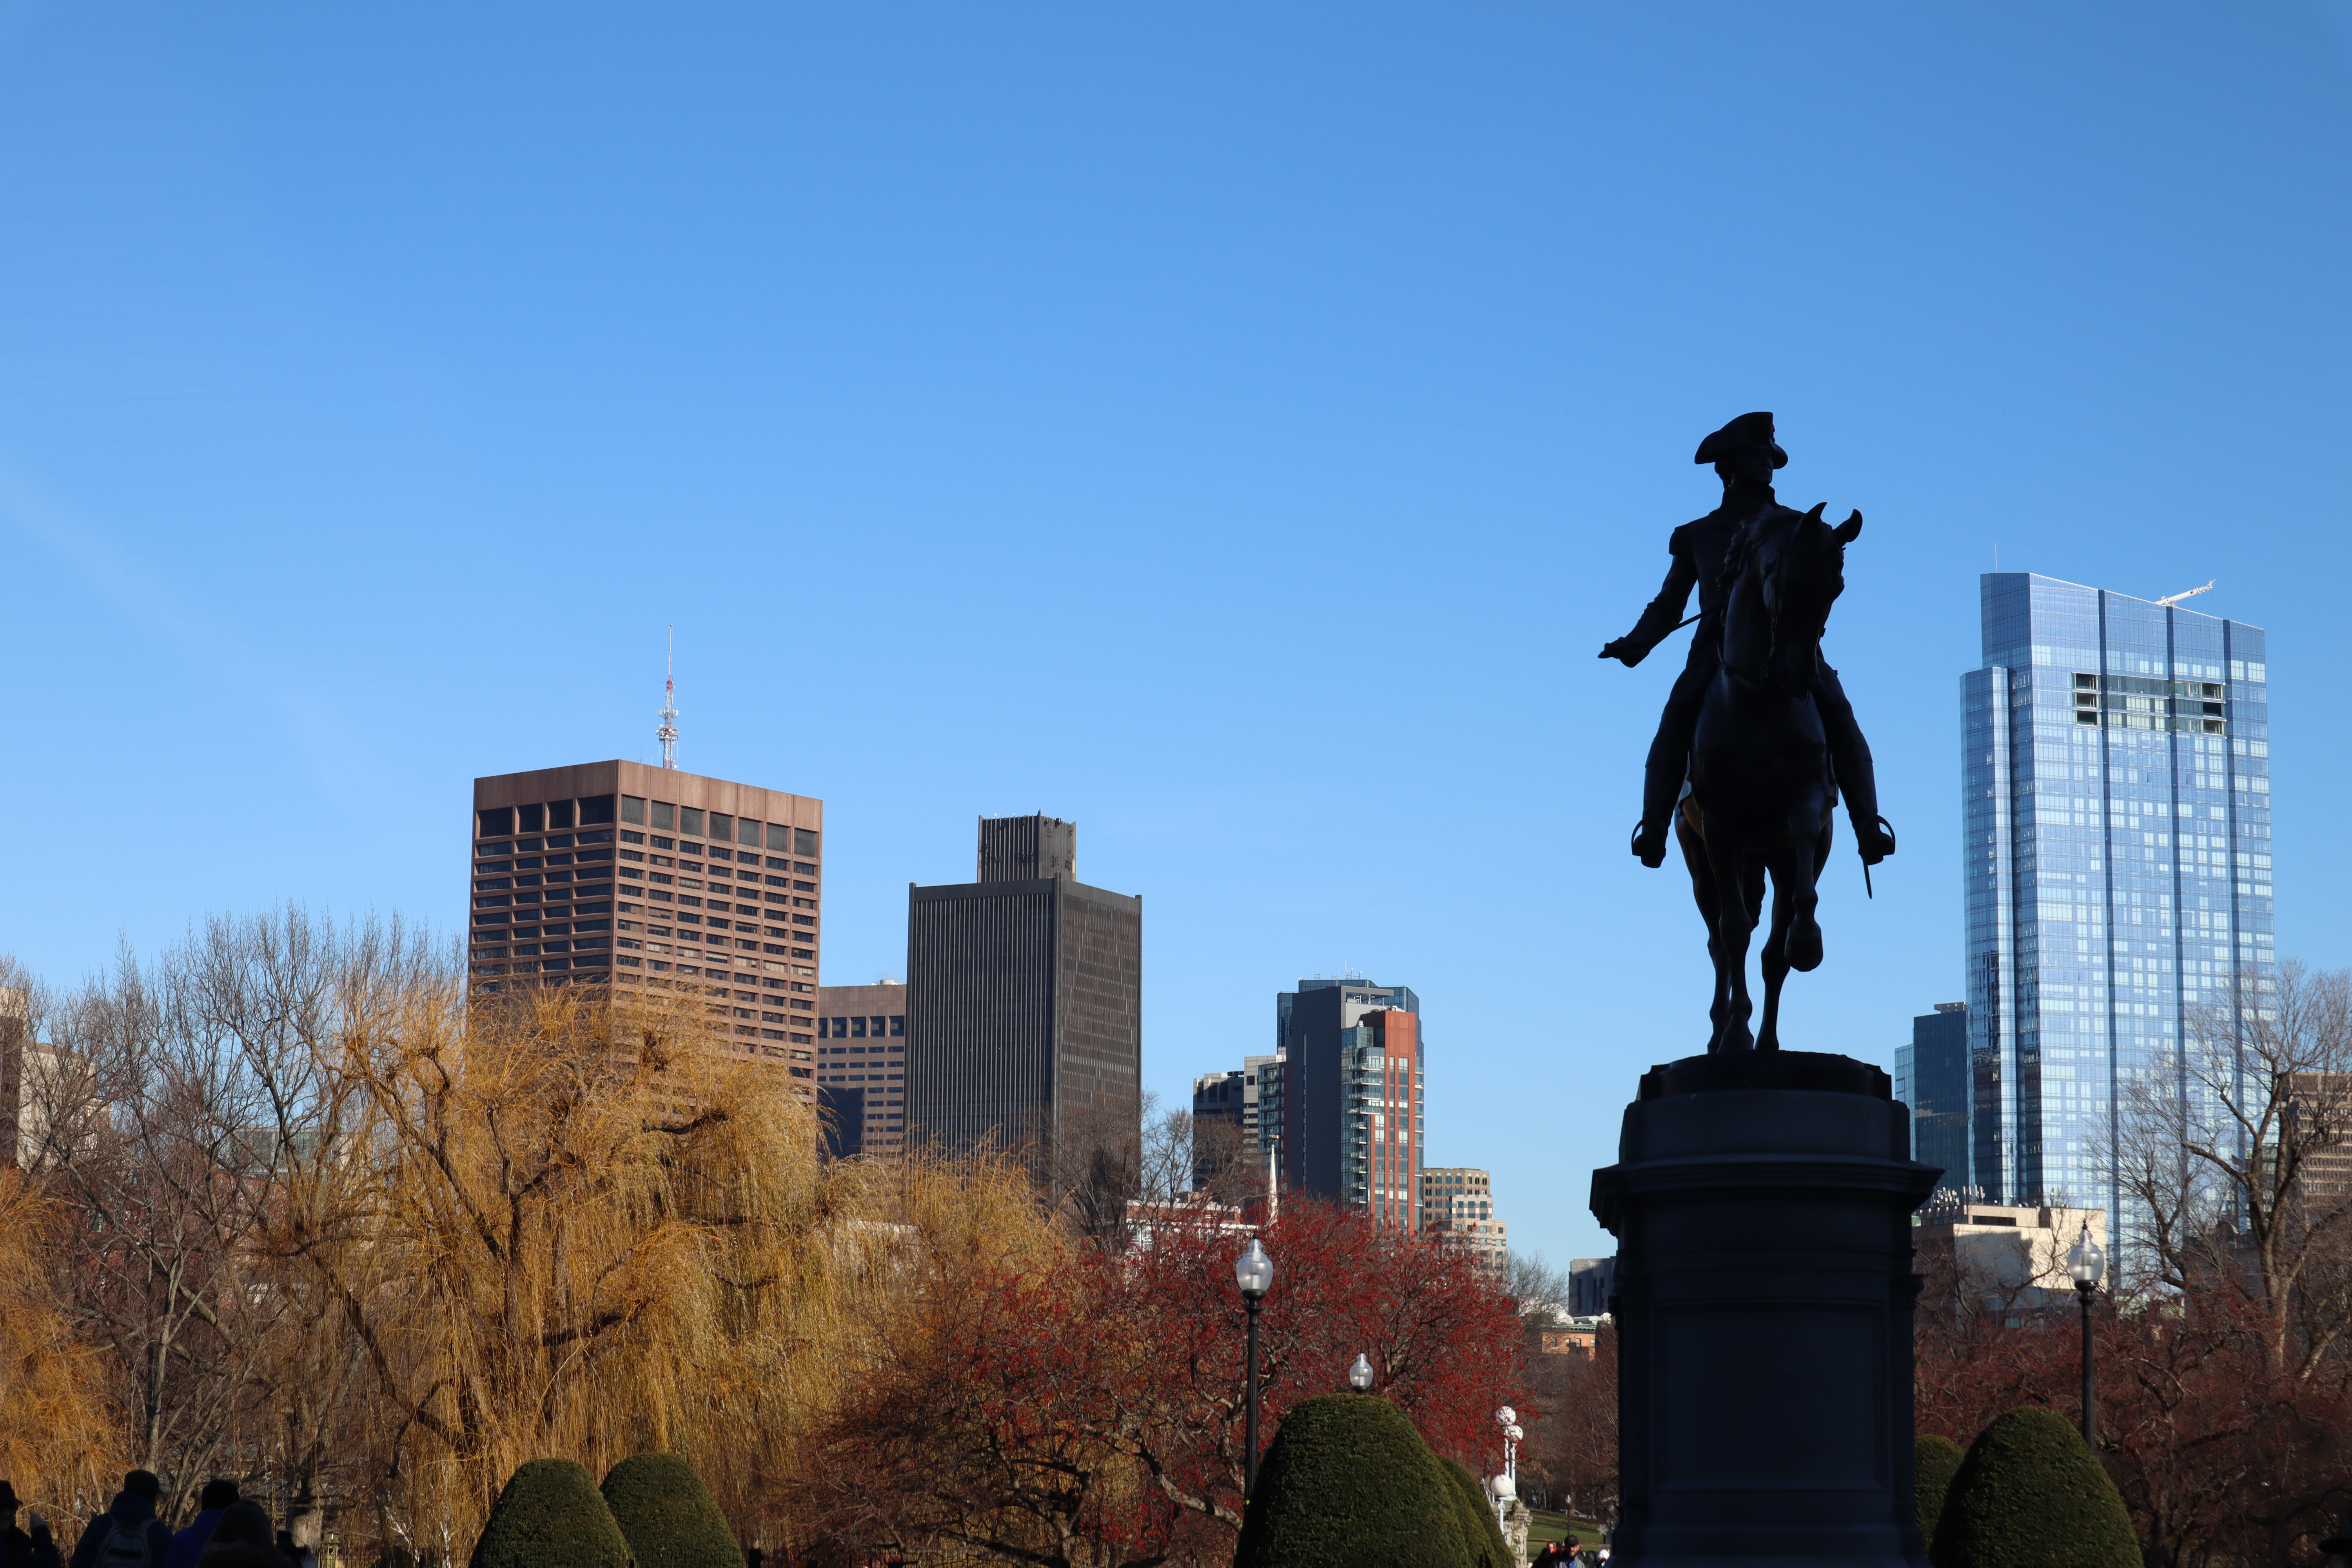 George Washington @ Boston Common